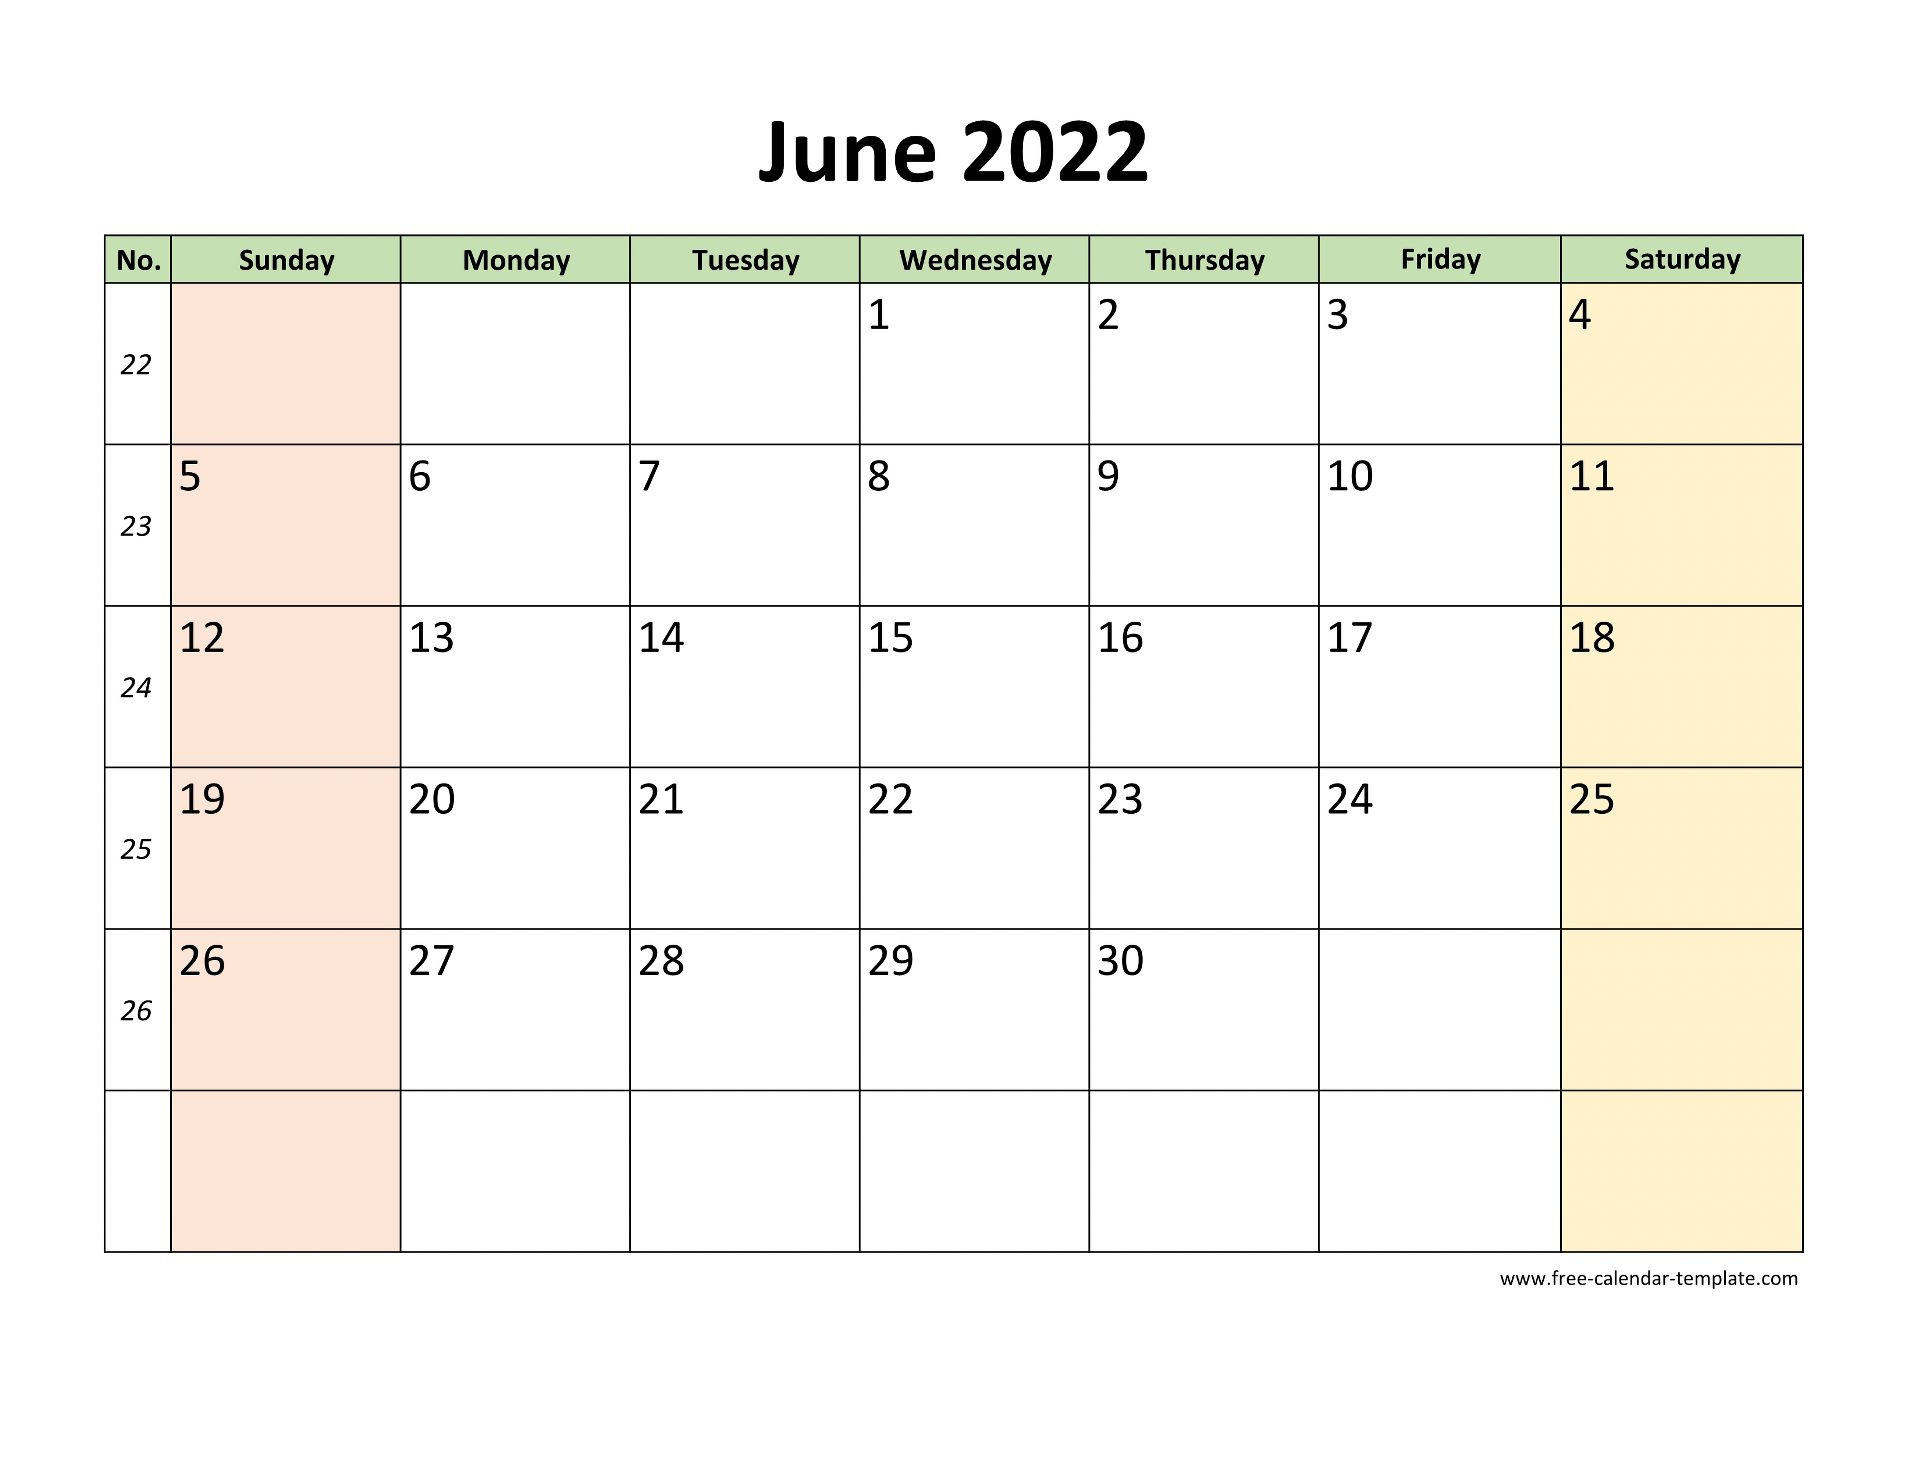 June 2022 Free Calendar Tempplate | Free-Calendar-Template  2022 Calendar January To June